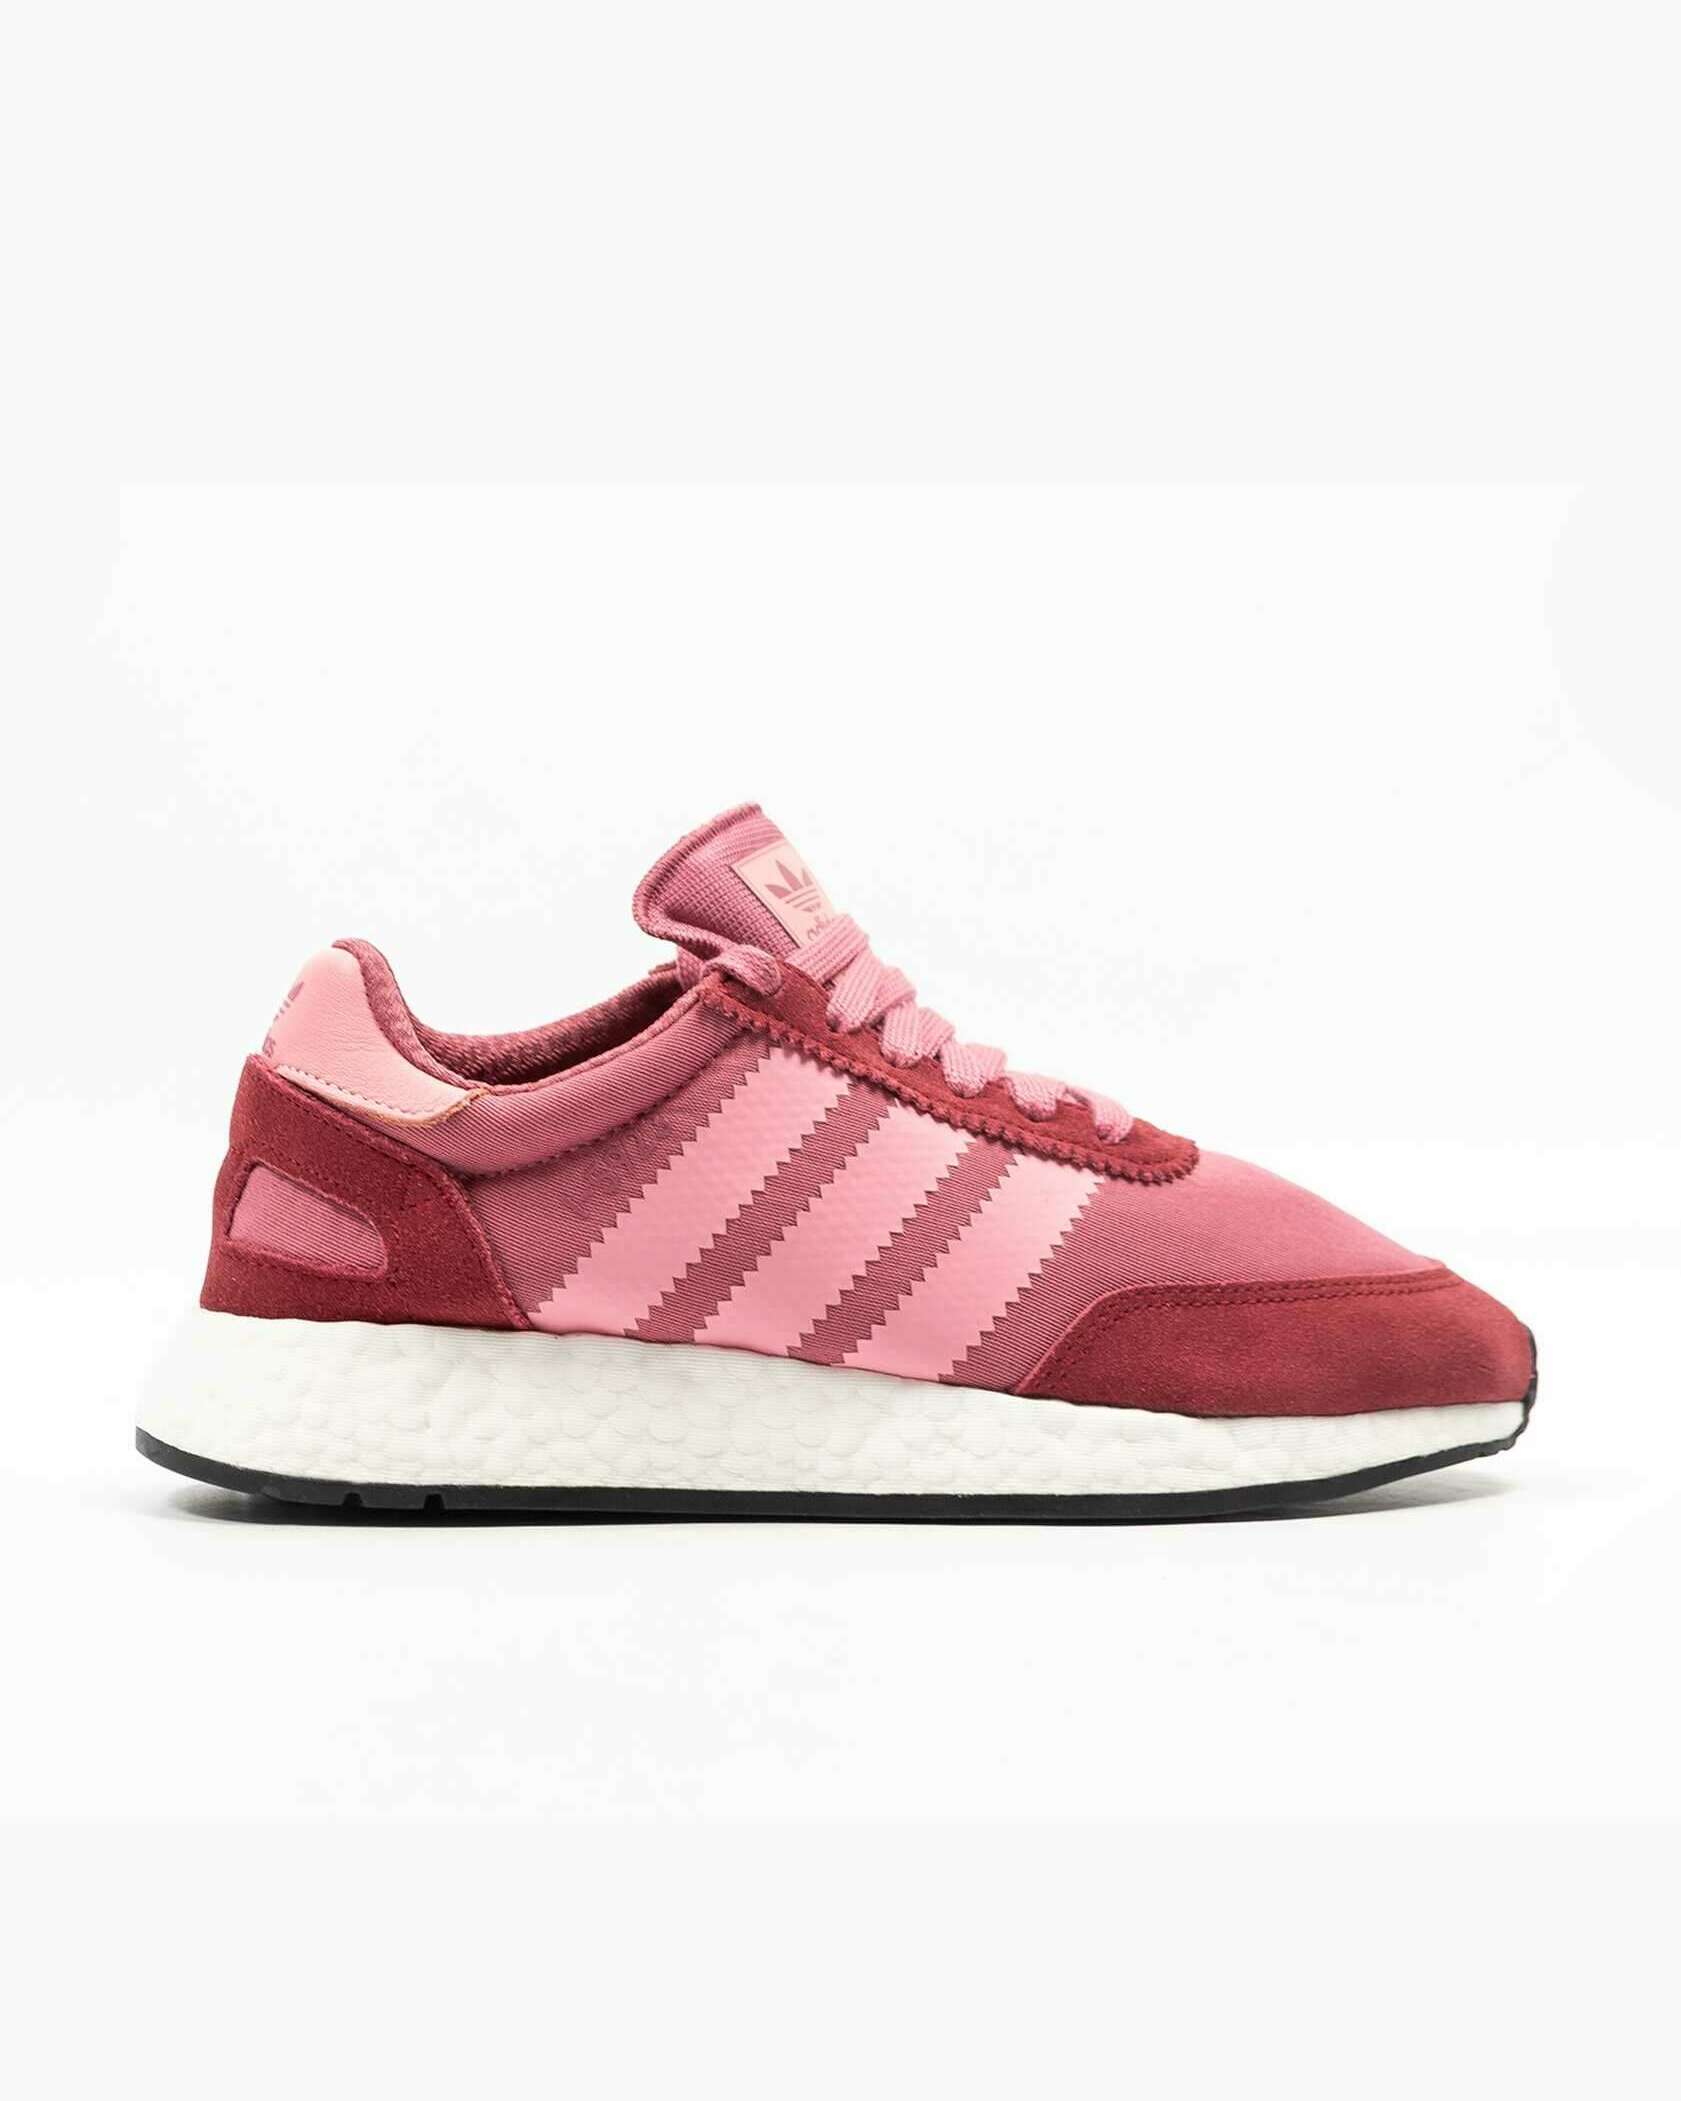 adidas I-5923 Pink D97352| Buy Online at FOOTDISTRICT